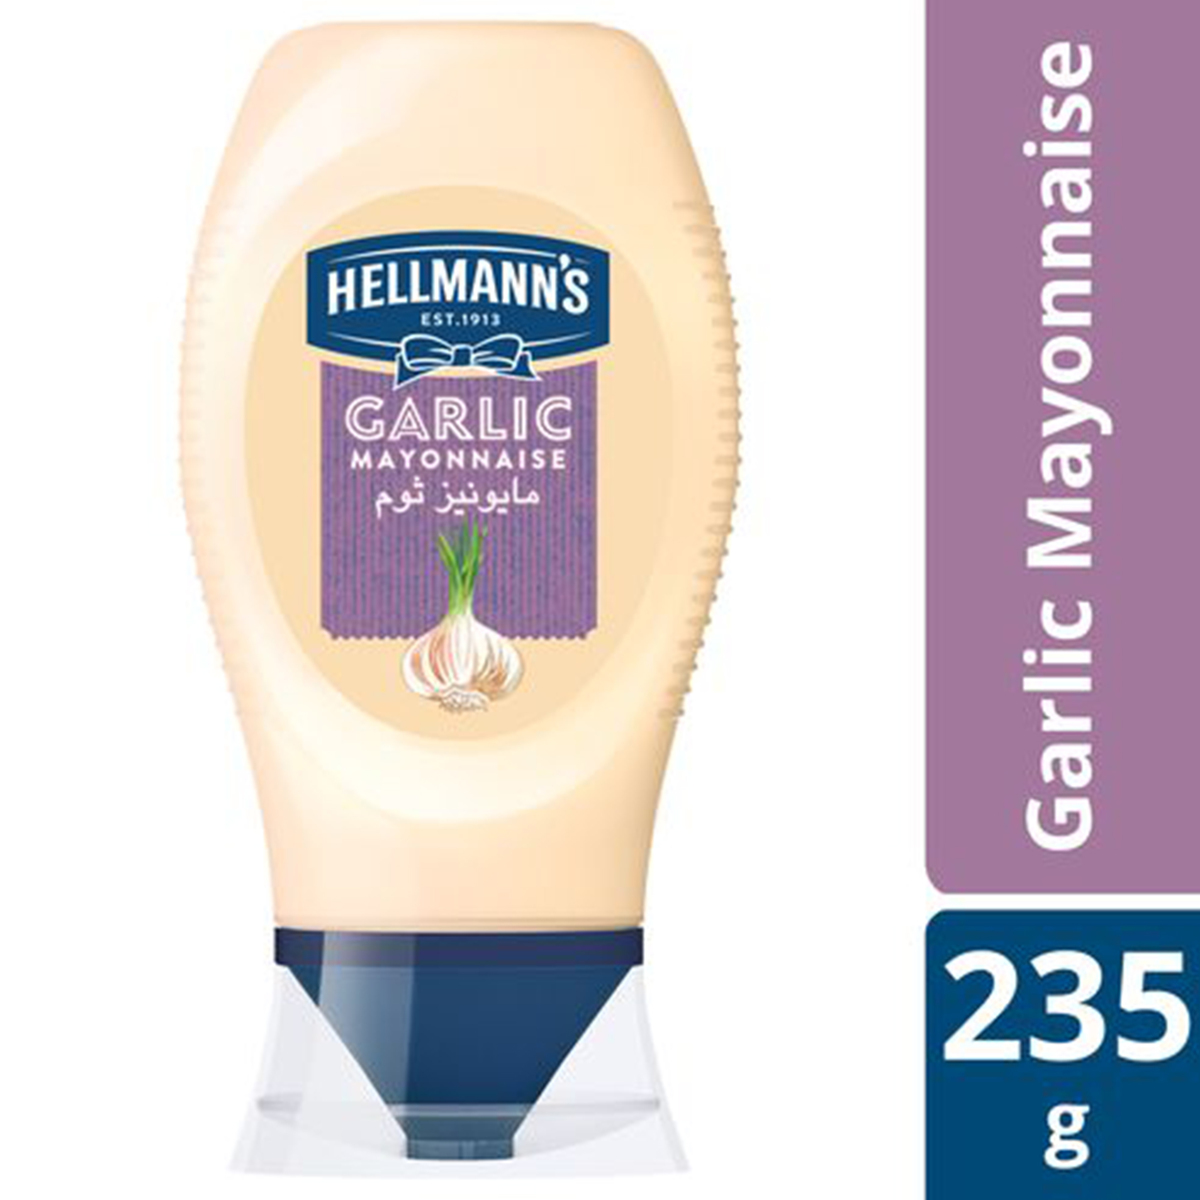 Hellmann's Garlic Mayonnaise 235g